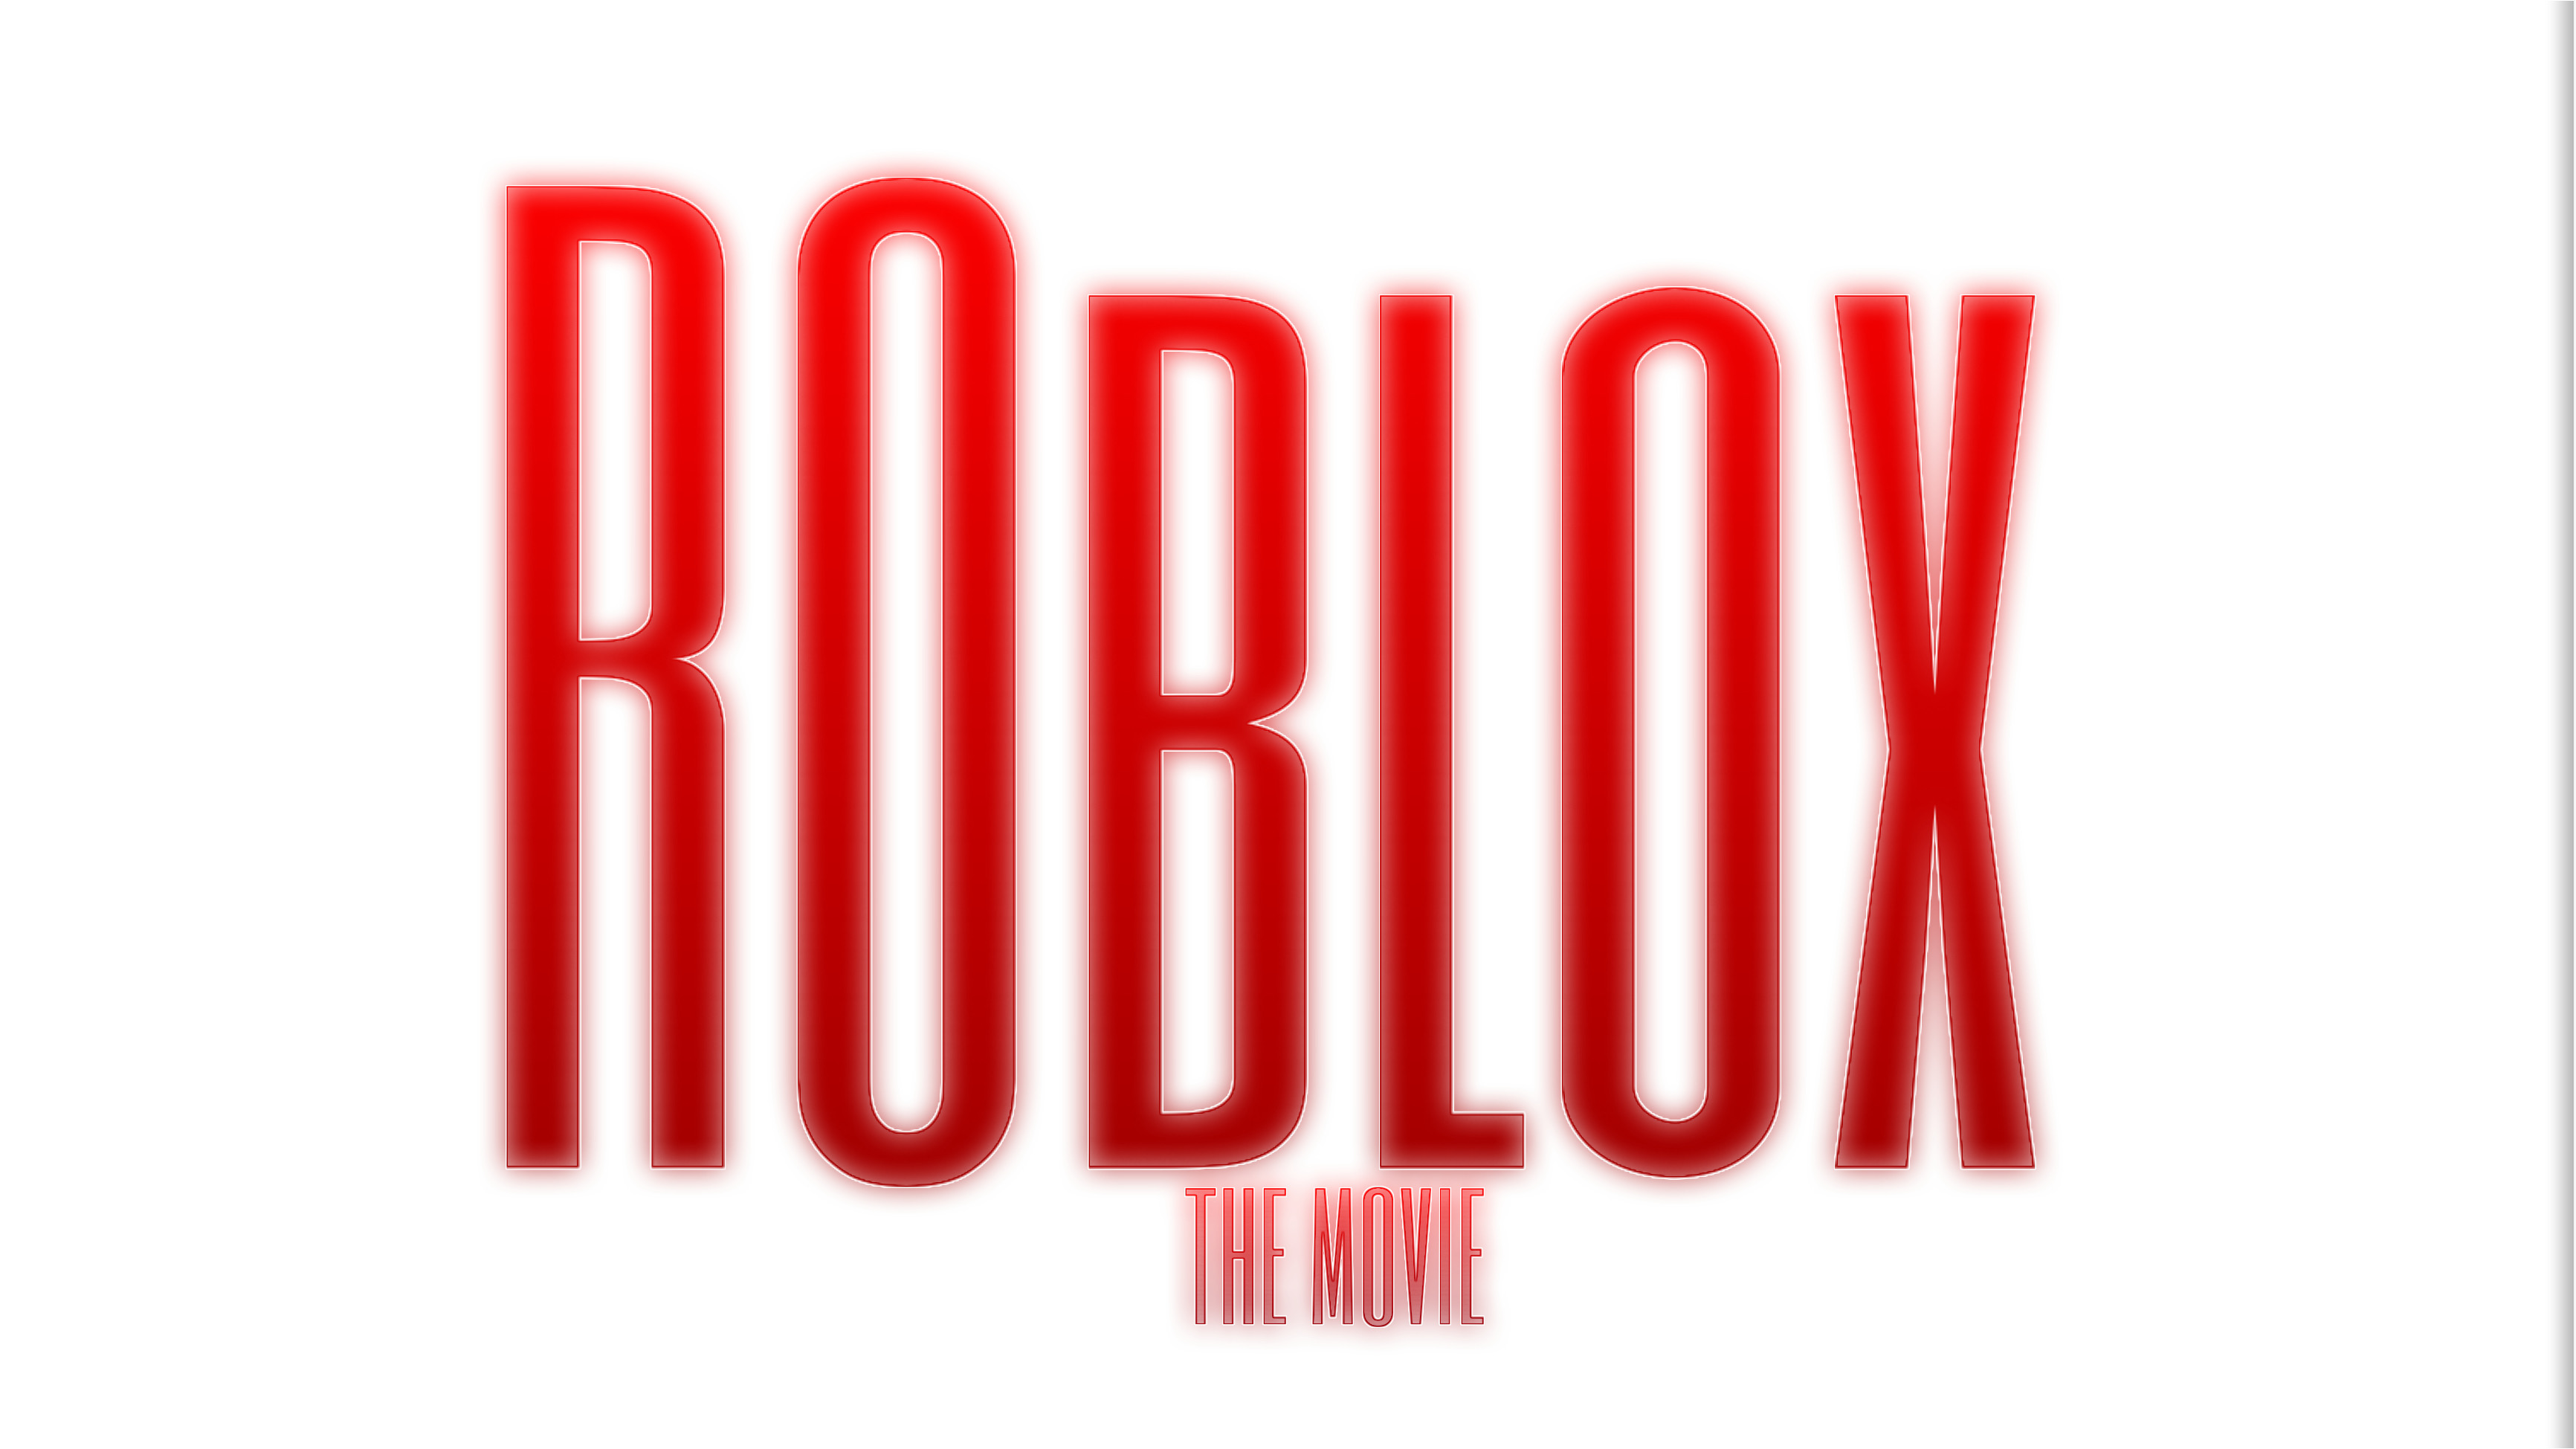 Roblox Is Here Roblox The Movie Image By Yuri Clark - yuri is yuri roblox